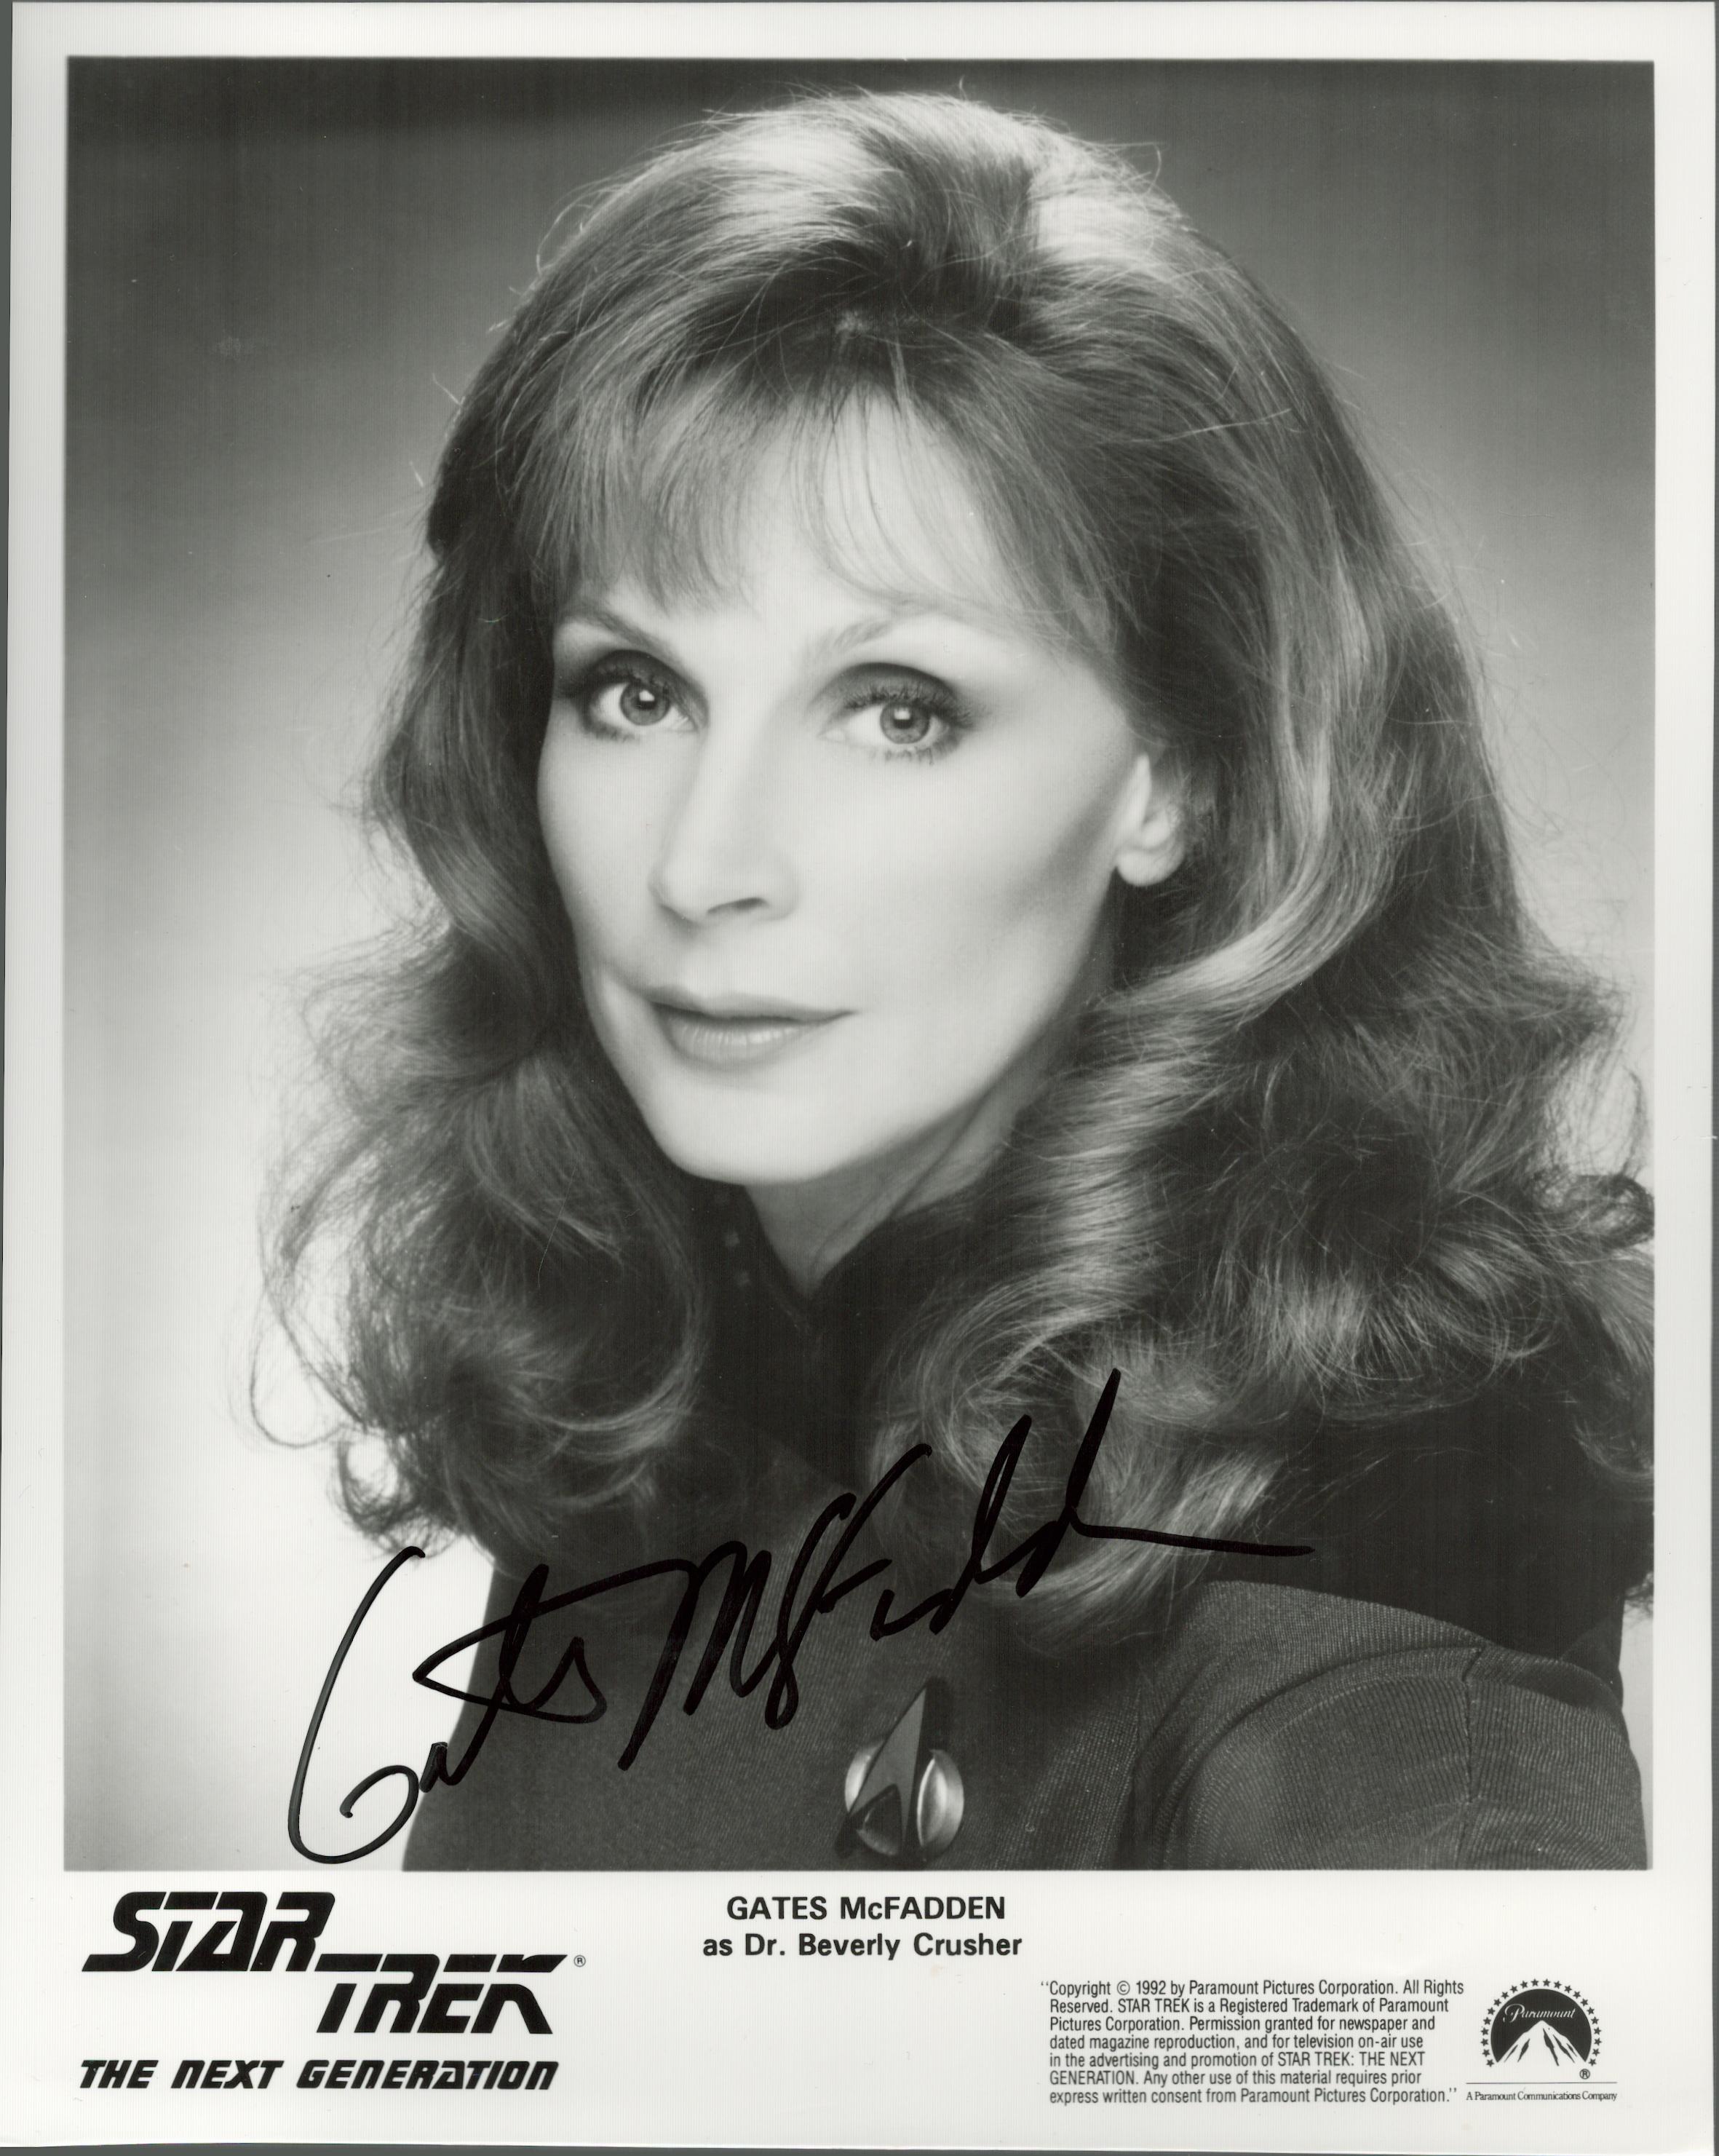 Star Trek Actor, Gates McFadden signed black and white promo photograph Signed in black marker